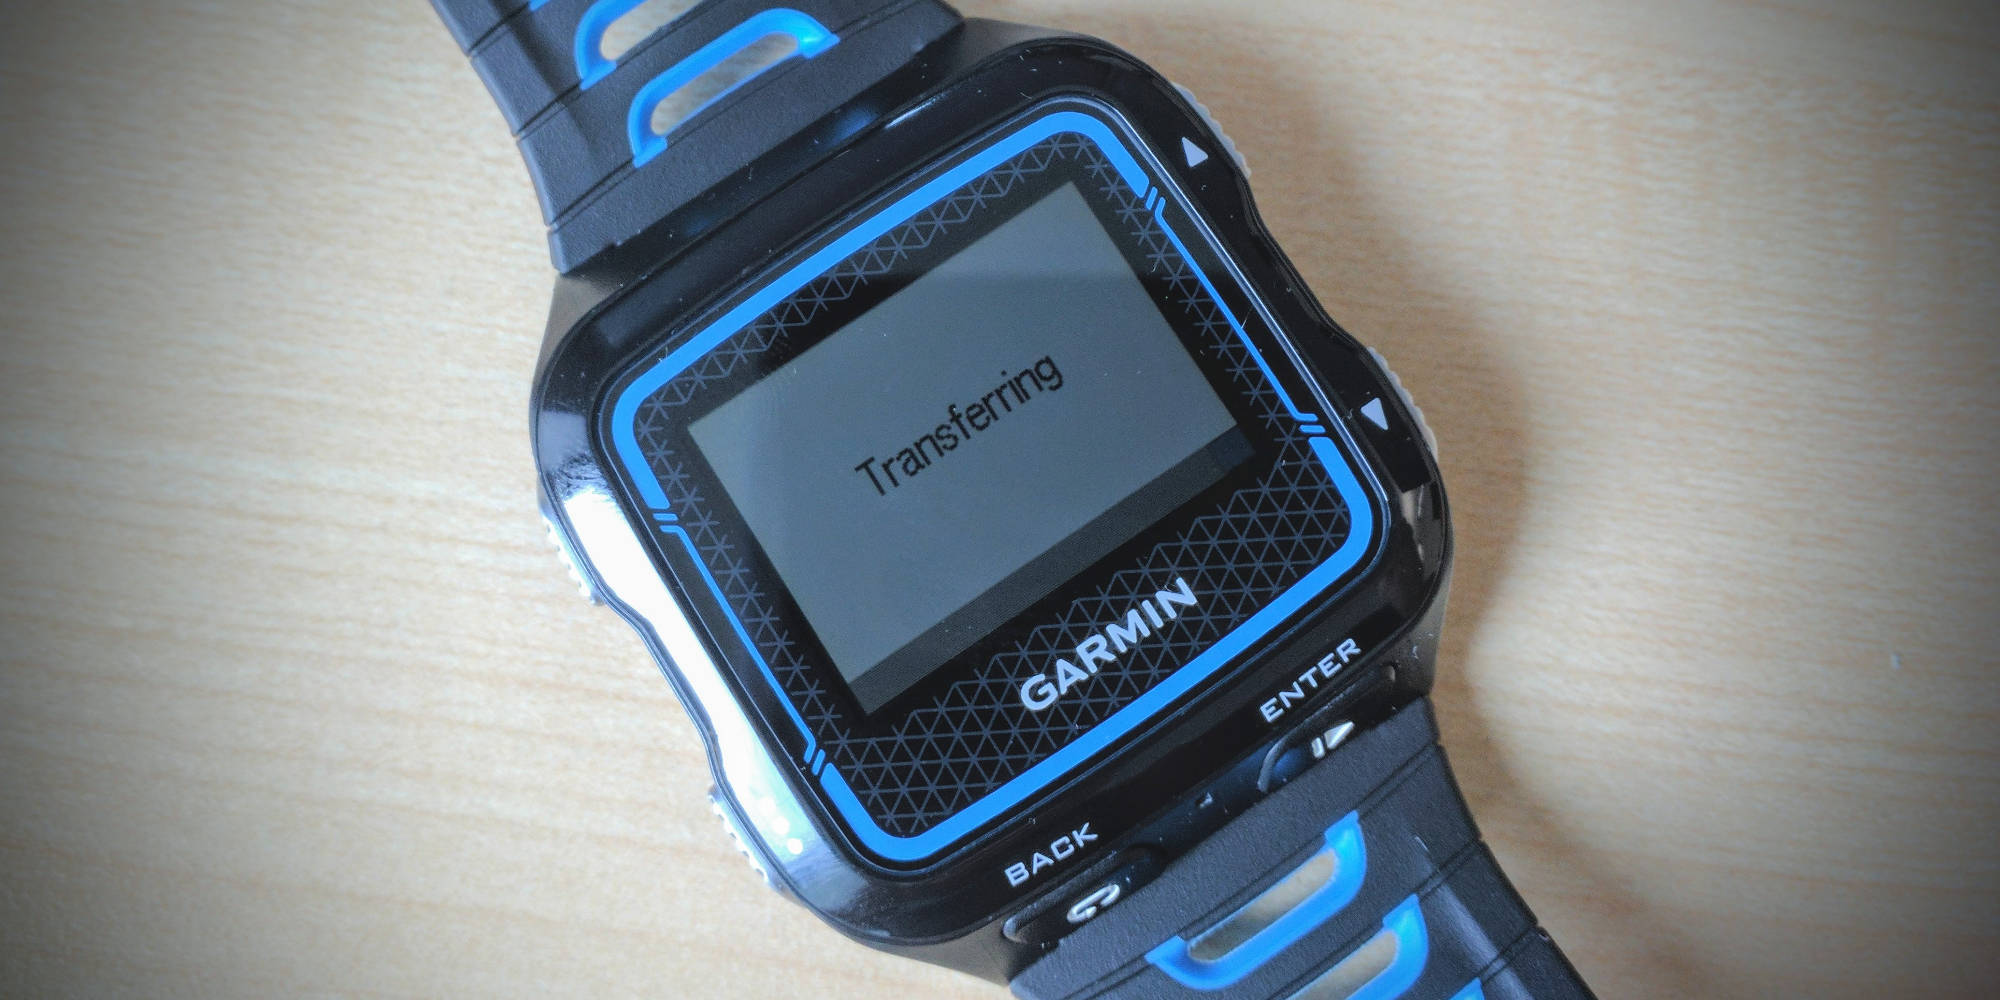 Garmin smartwatch downloading new firmware